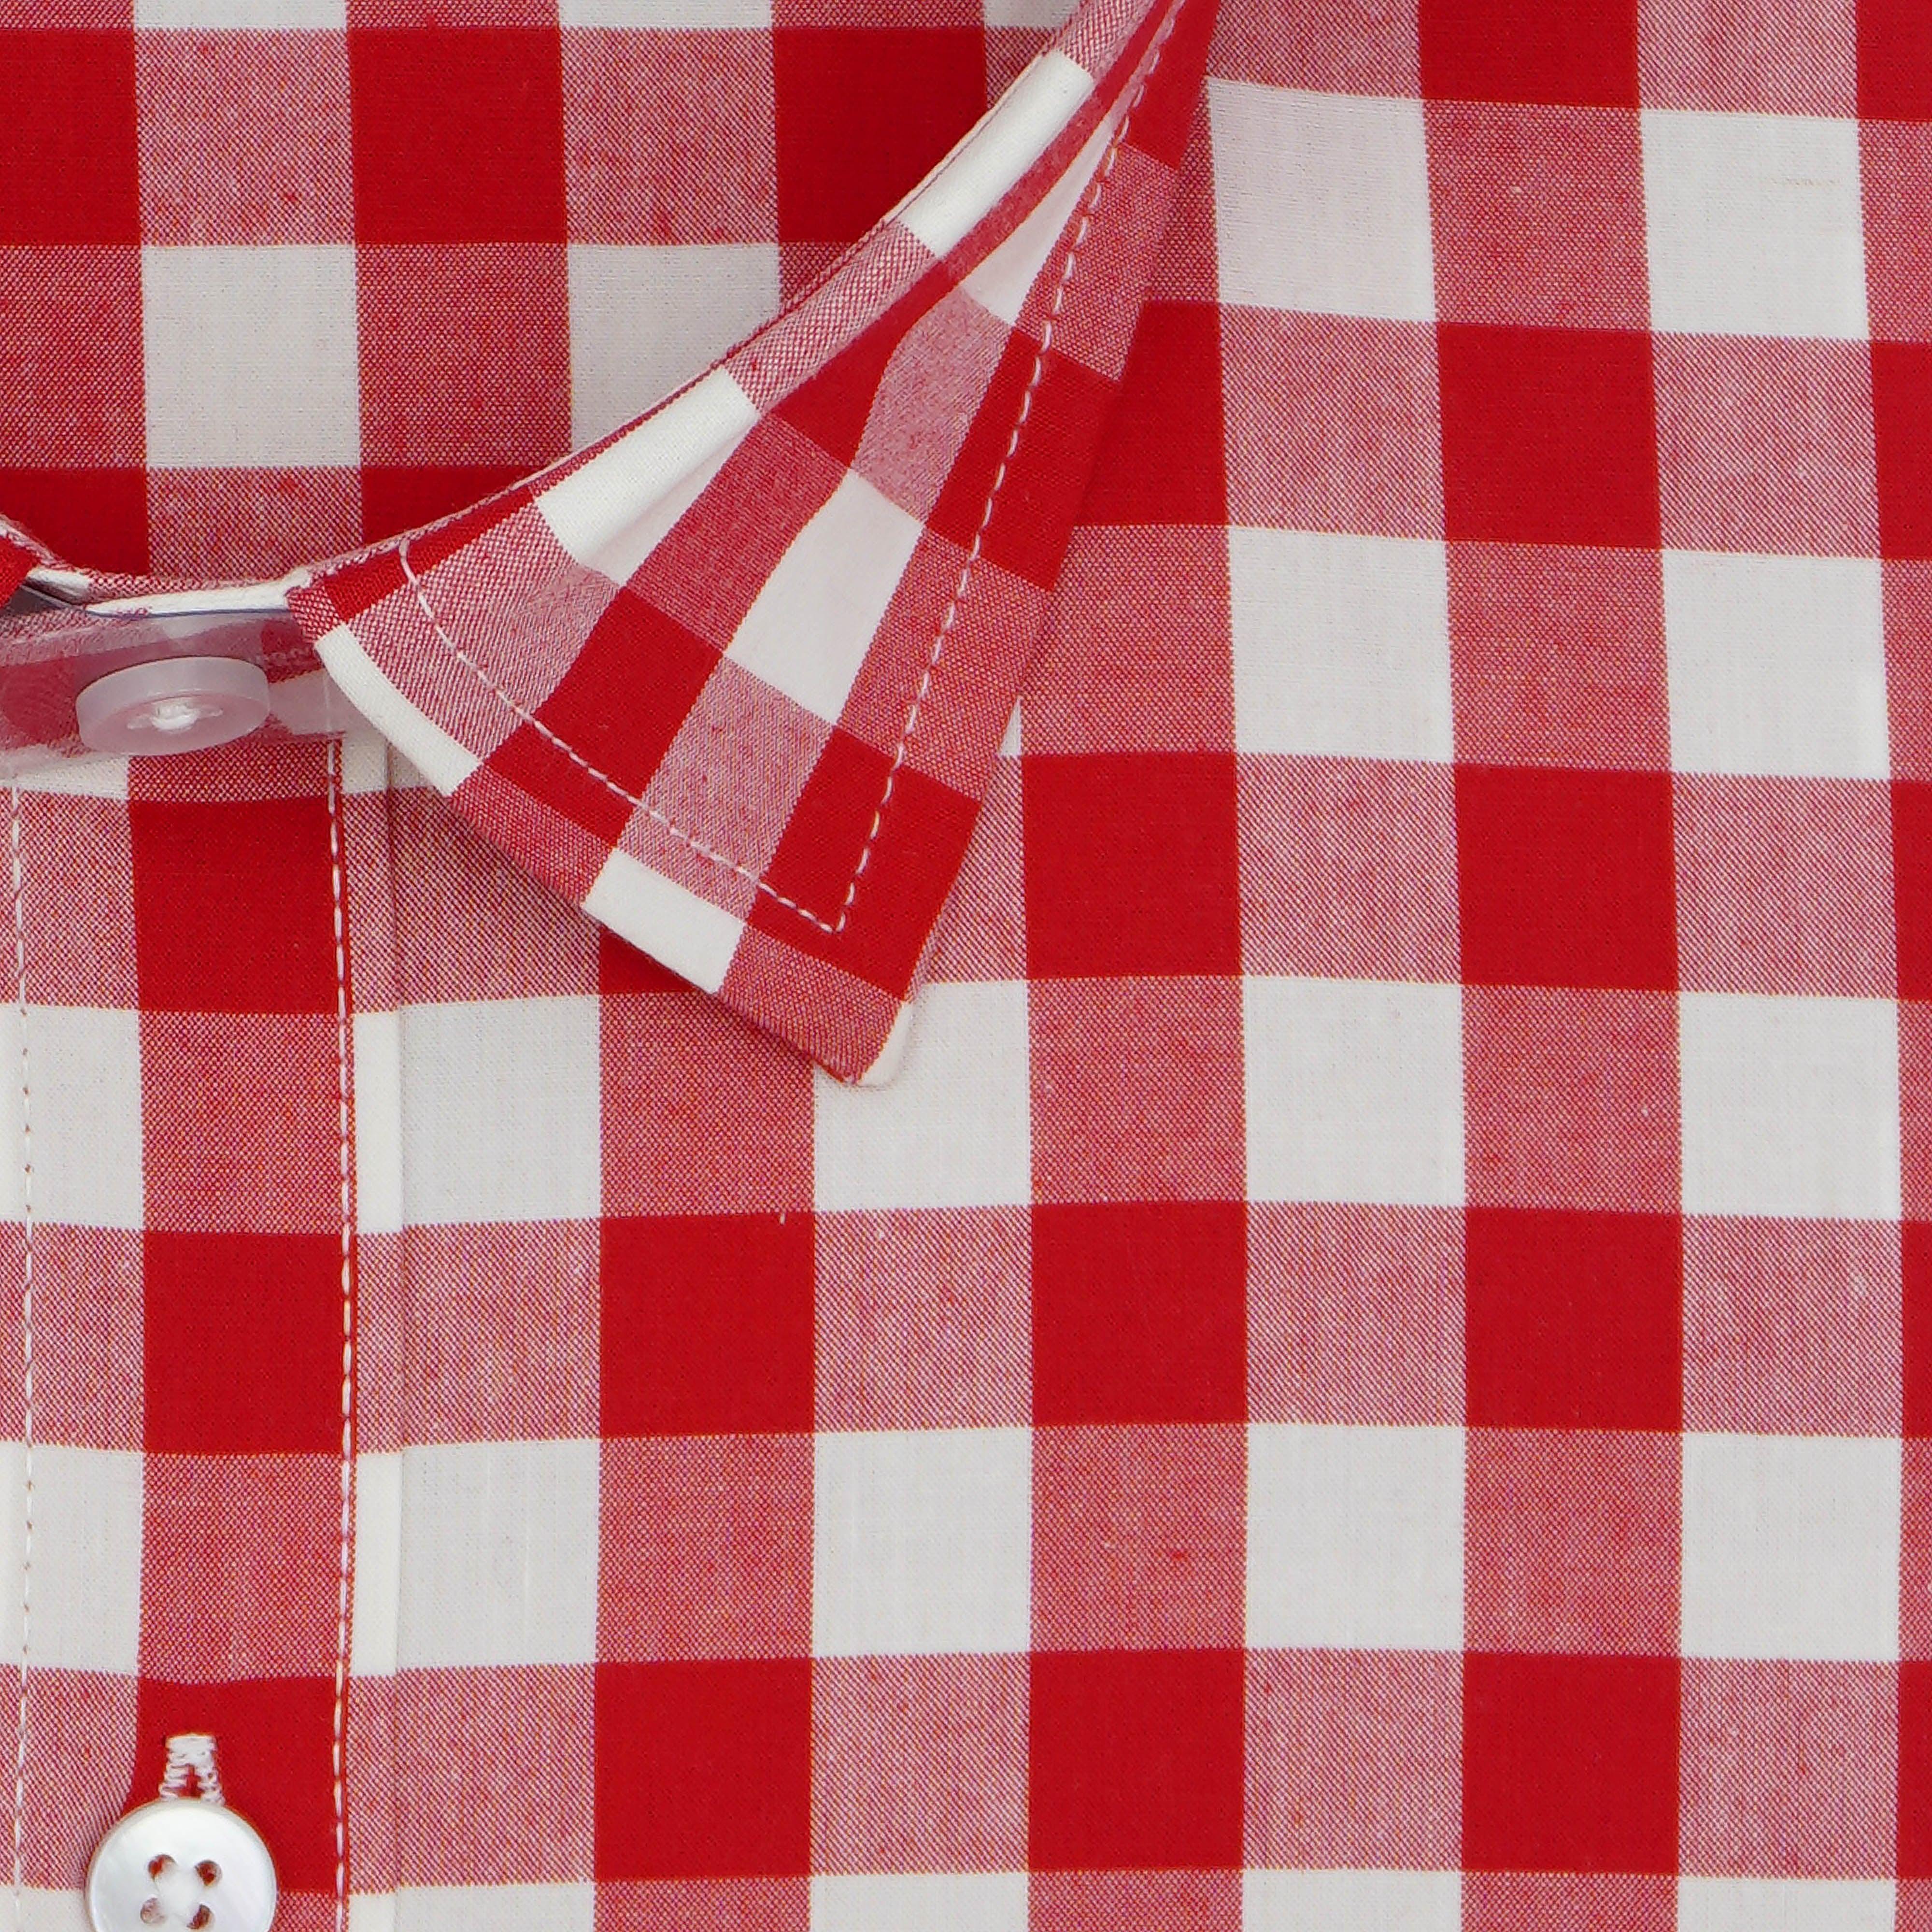 Men's 100% Cotton Gingham Checkered Full Sleeves Shirt (Red)